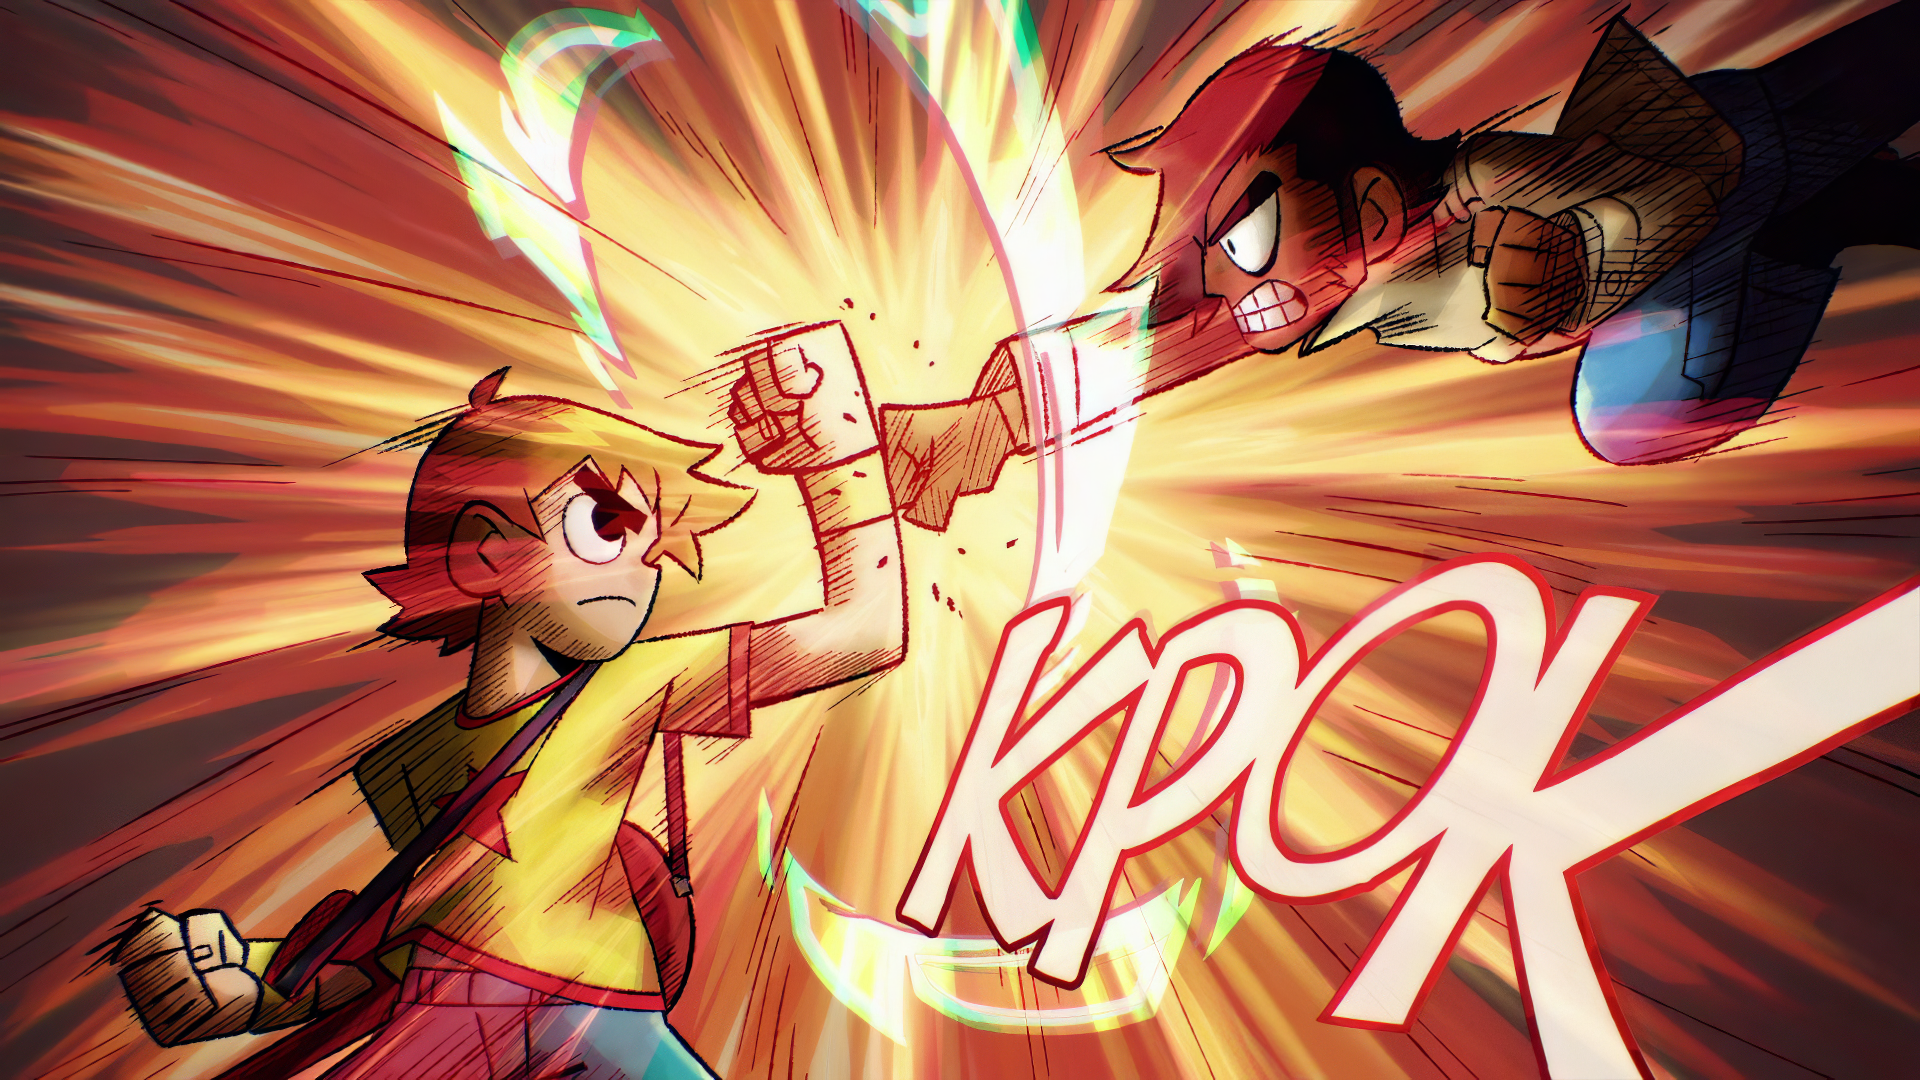 Scott Pilgrim cartoon-style HD desktop wallpaper featuring dynamic battle scene with a high-impact 'KPOW' effect, perfect for Scott Pilgrim fans.